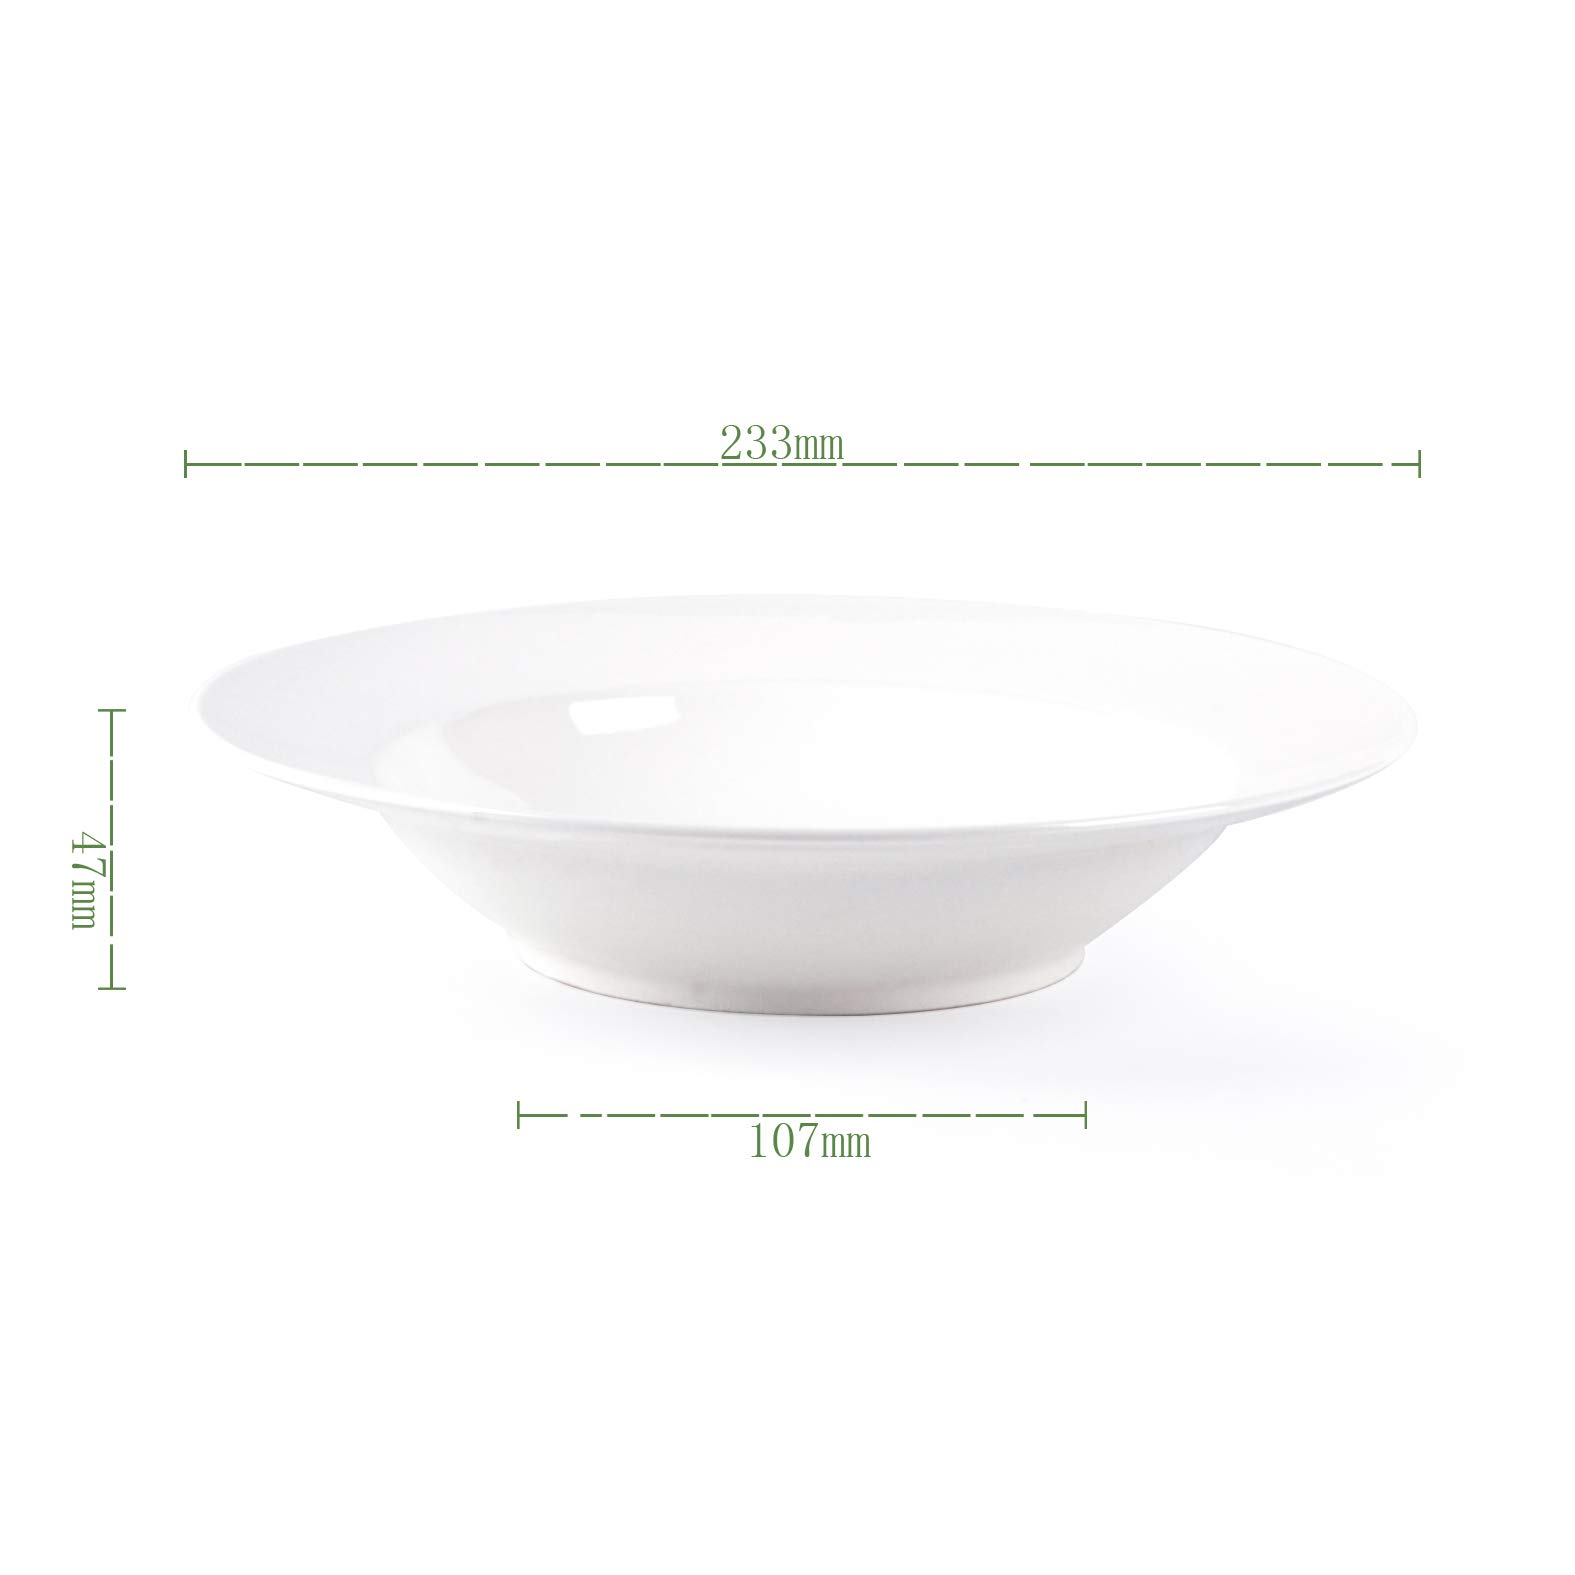 HomeVss, Bone China Rim Shape, Elegance White Pasta/Soup Plate/Bowl 12oz, Case of 6